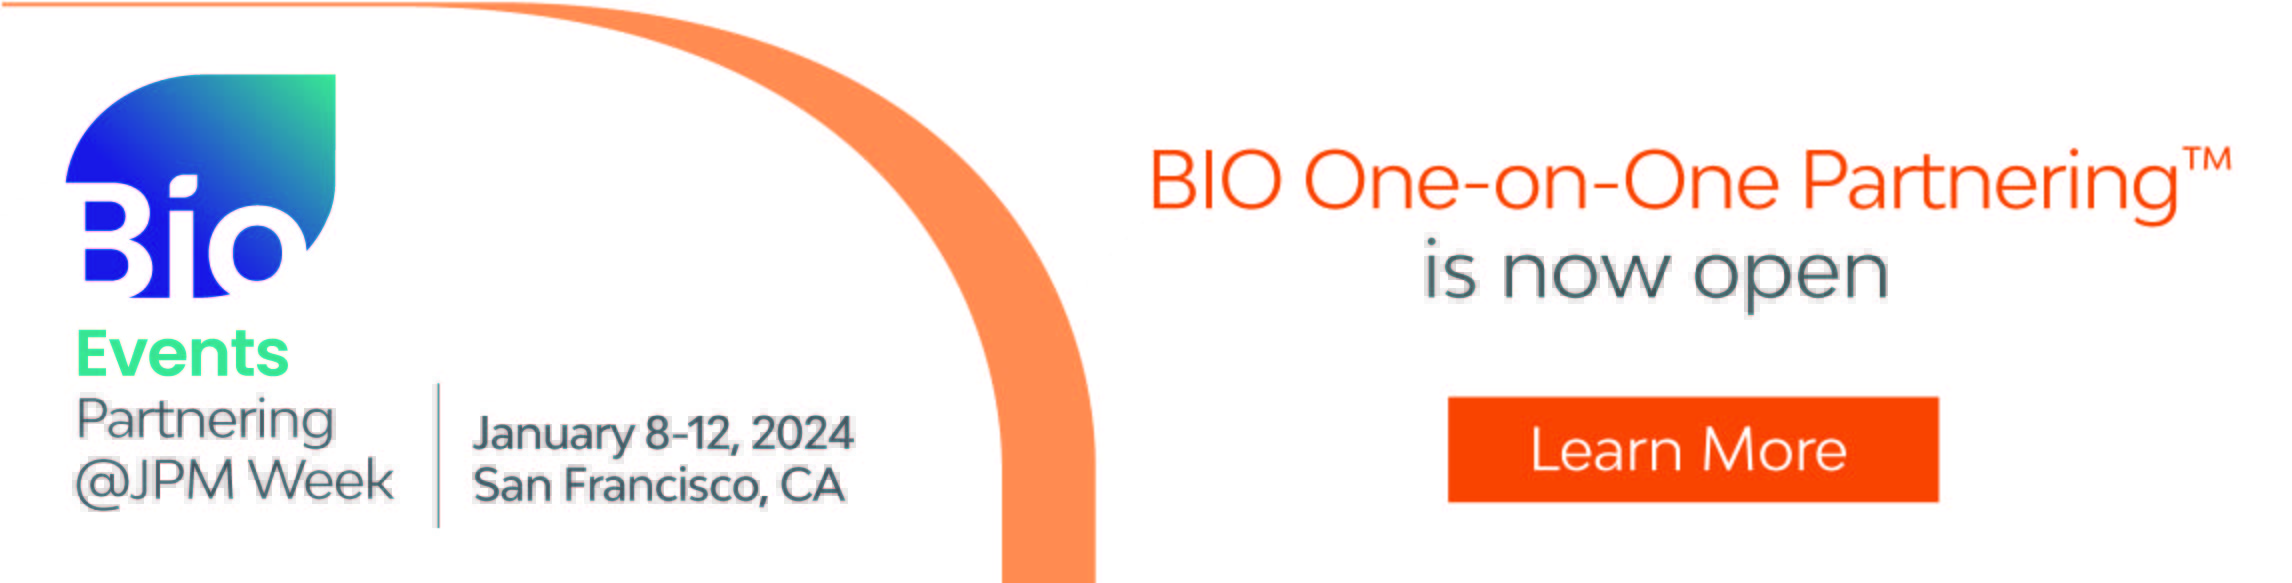 BIO Partnering is now open for JPM Week!